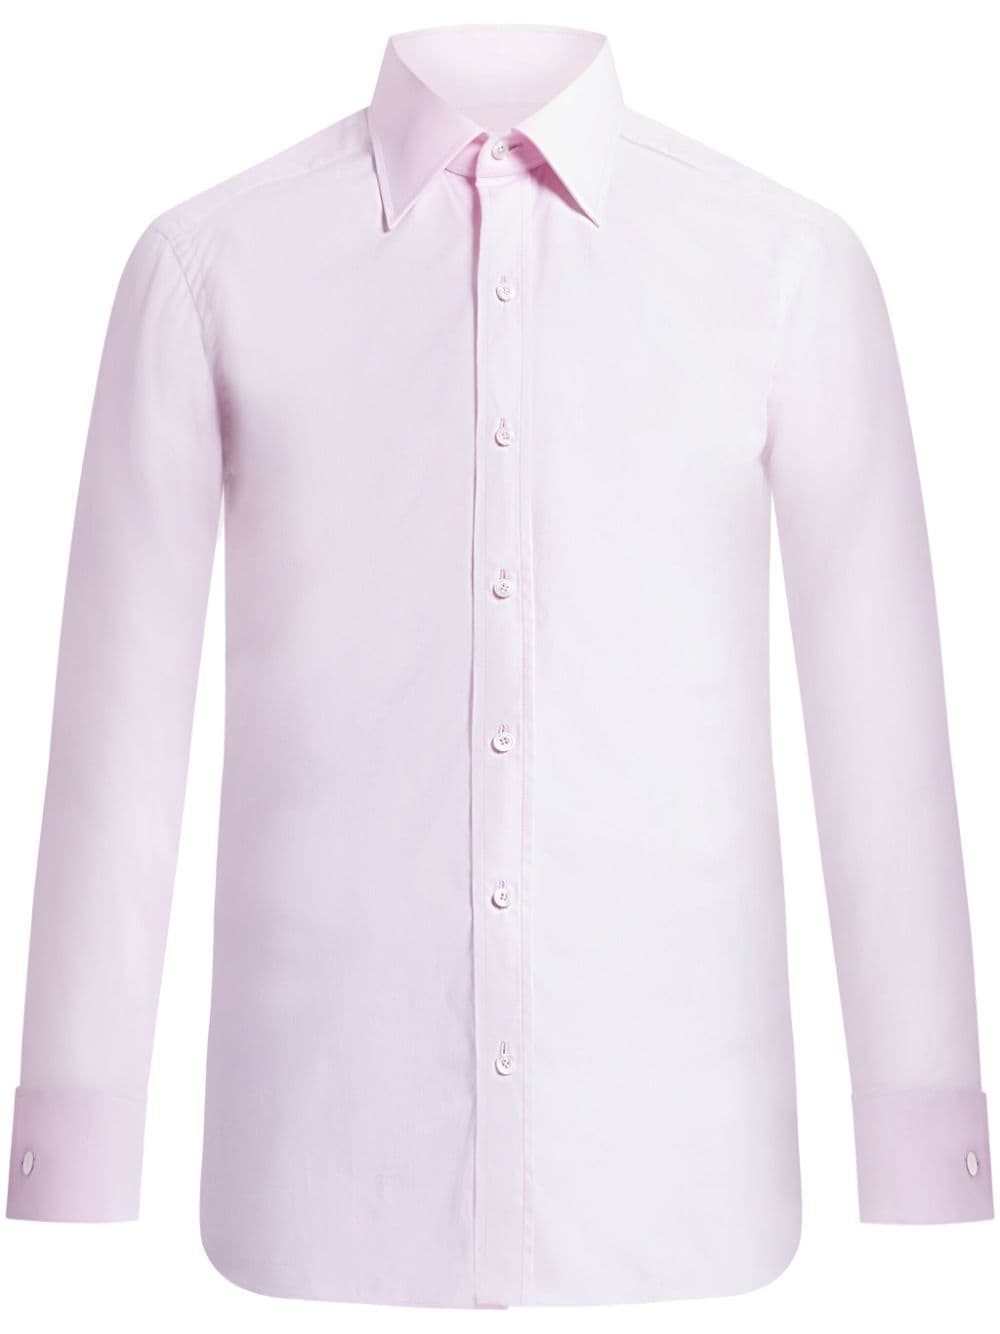 TOM FORD cotton poplin shirt - Pink